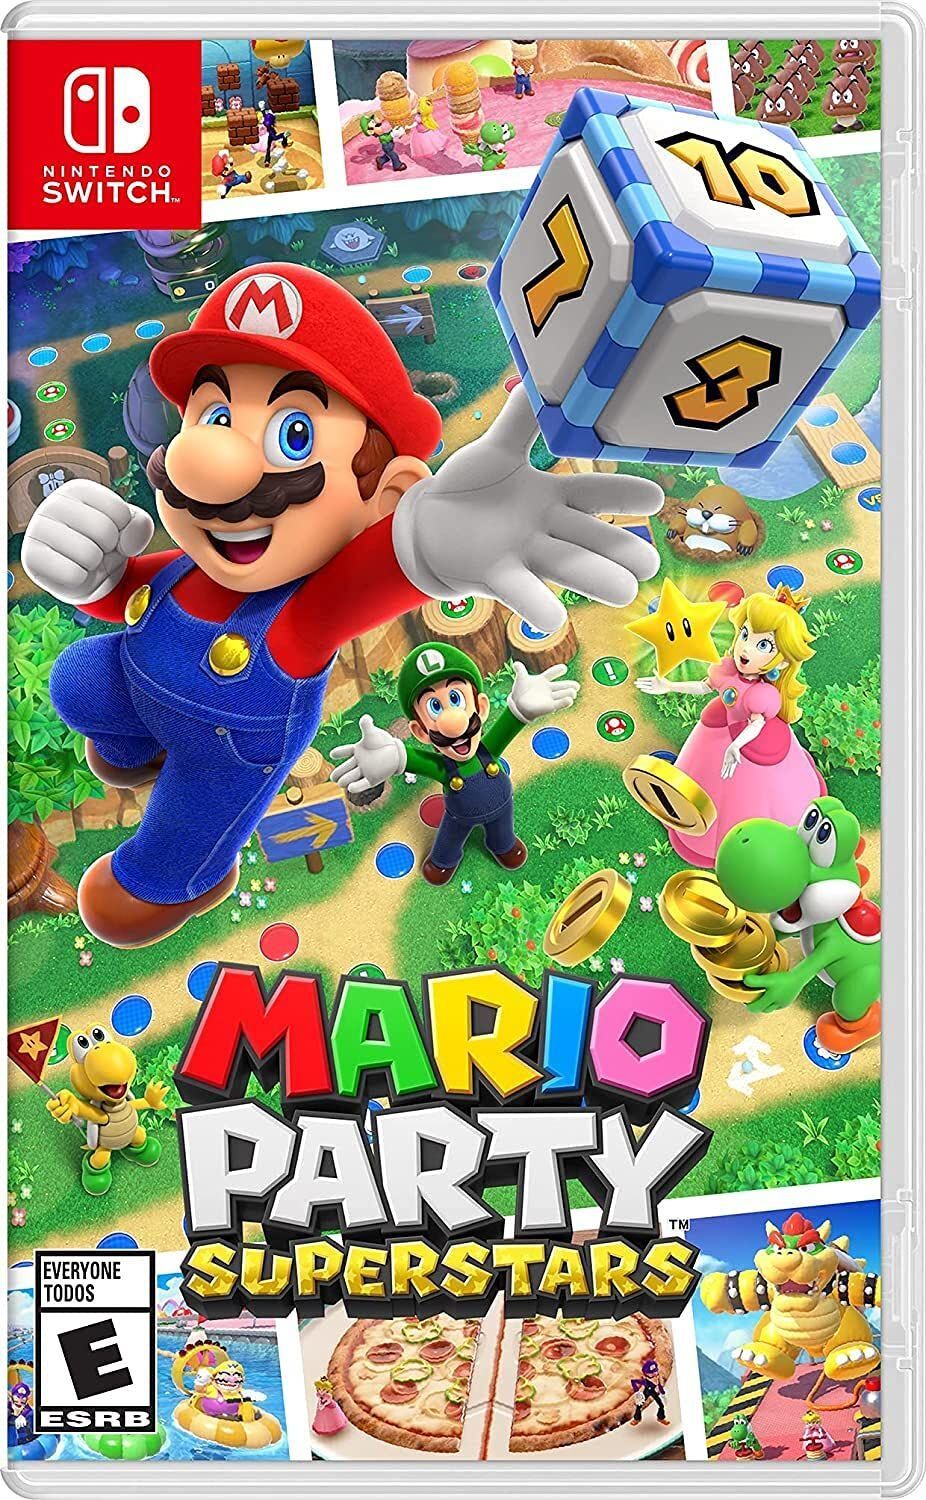 Mario Party: 10 Best Minigames